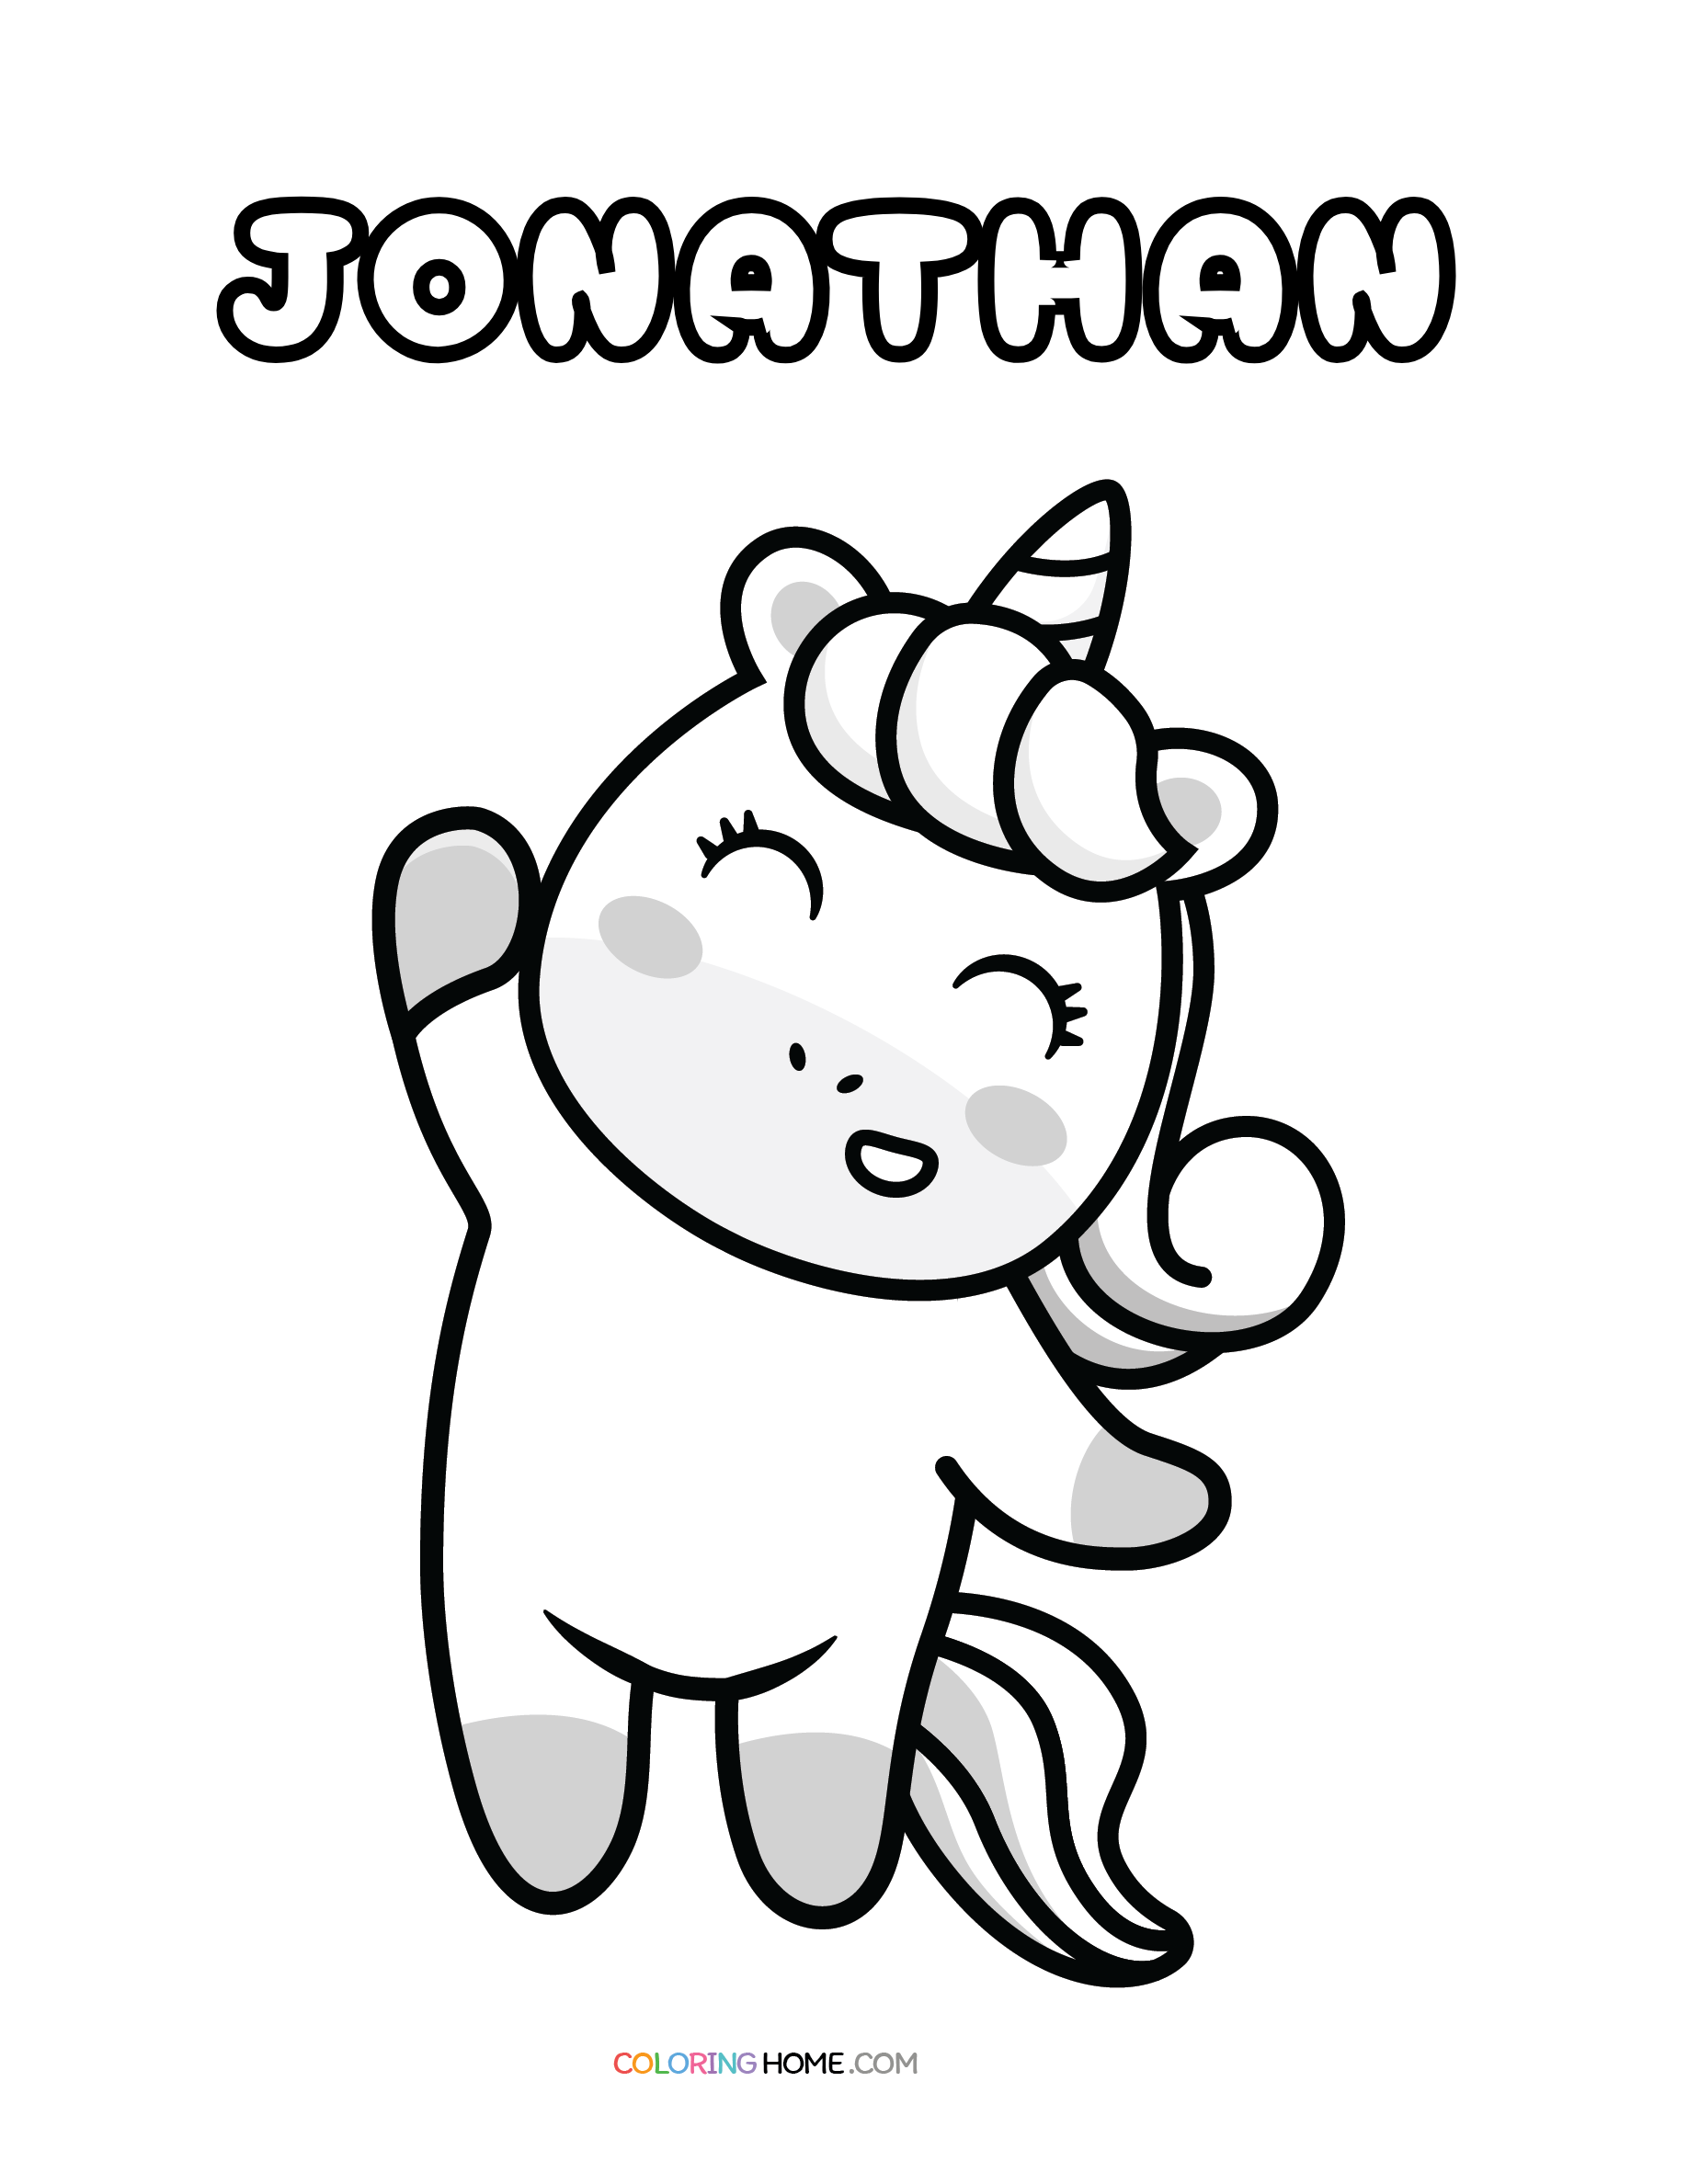 Jonathan unicorn coloring page